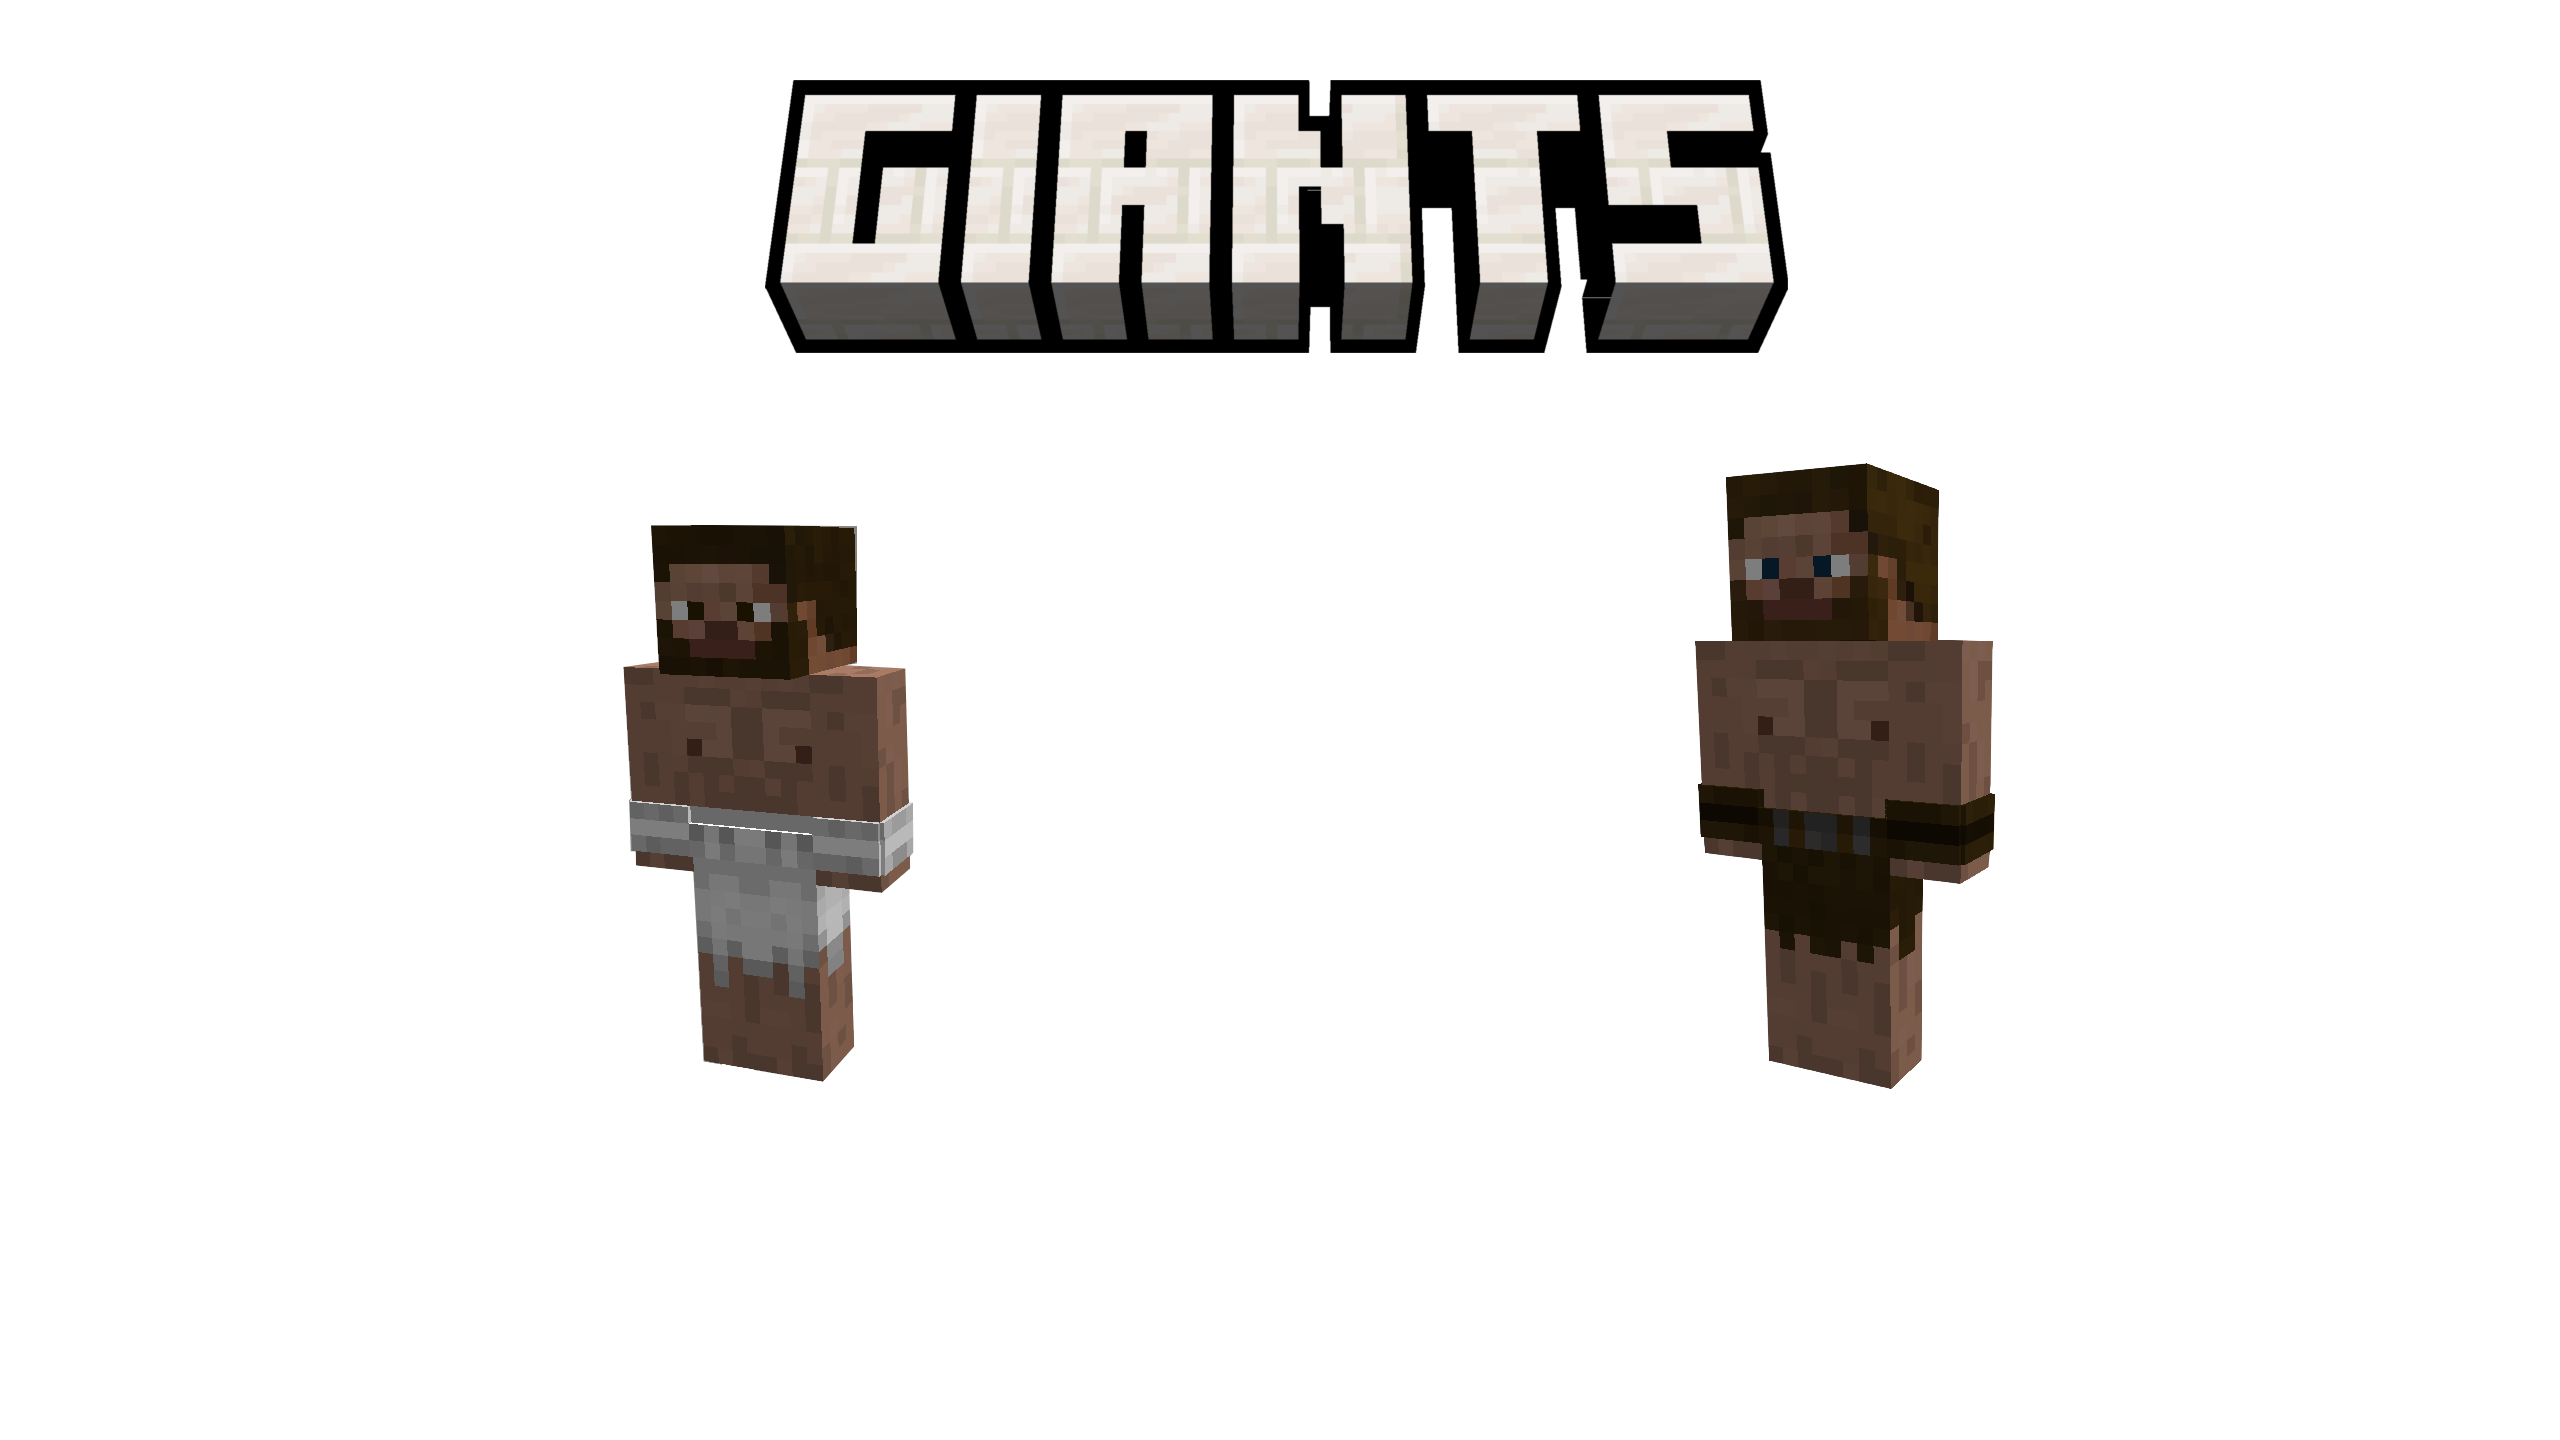 giants pic export